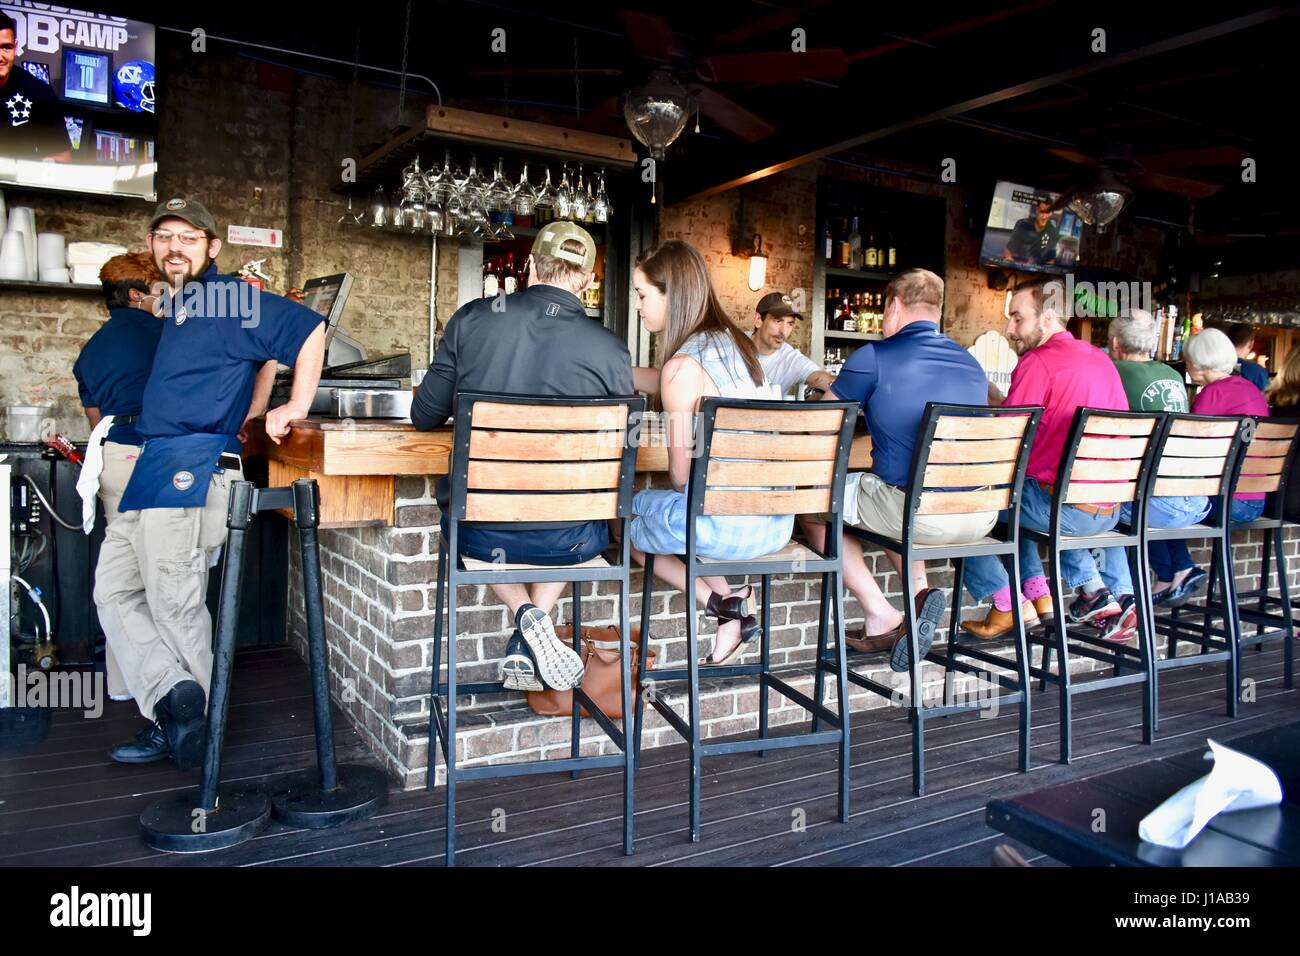 Customers sitting at restaurant bar Stock Photo